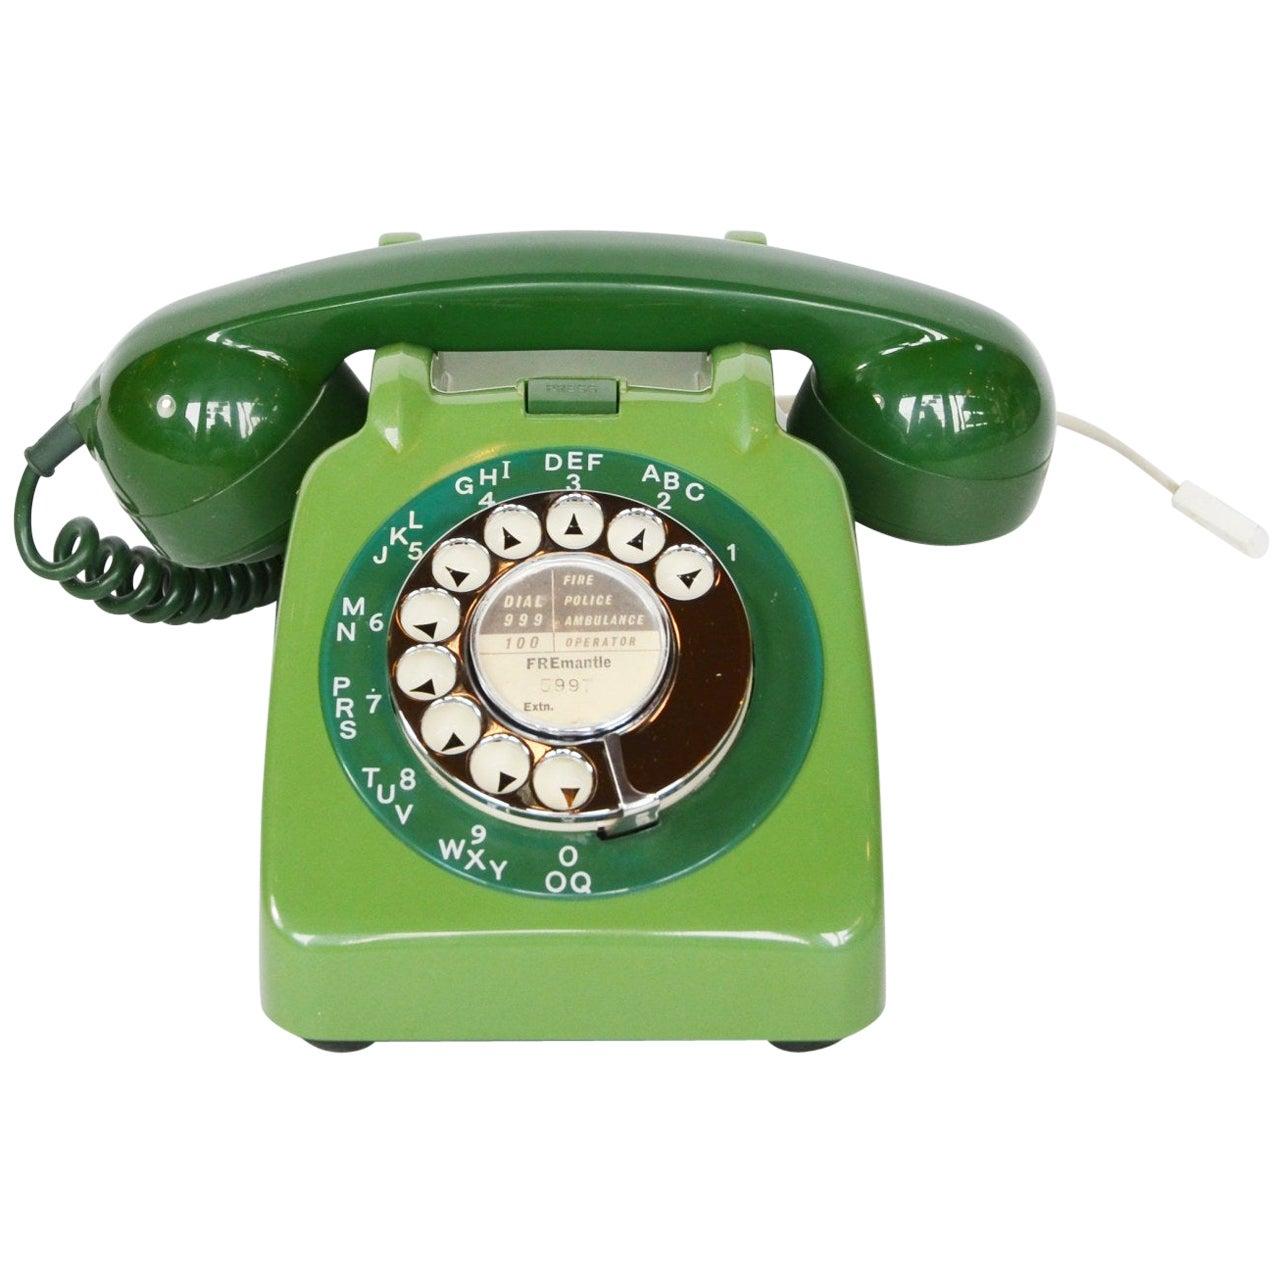 Original GPO Model 706L Telephone Full Working Order